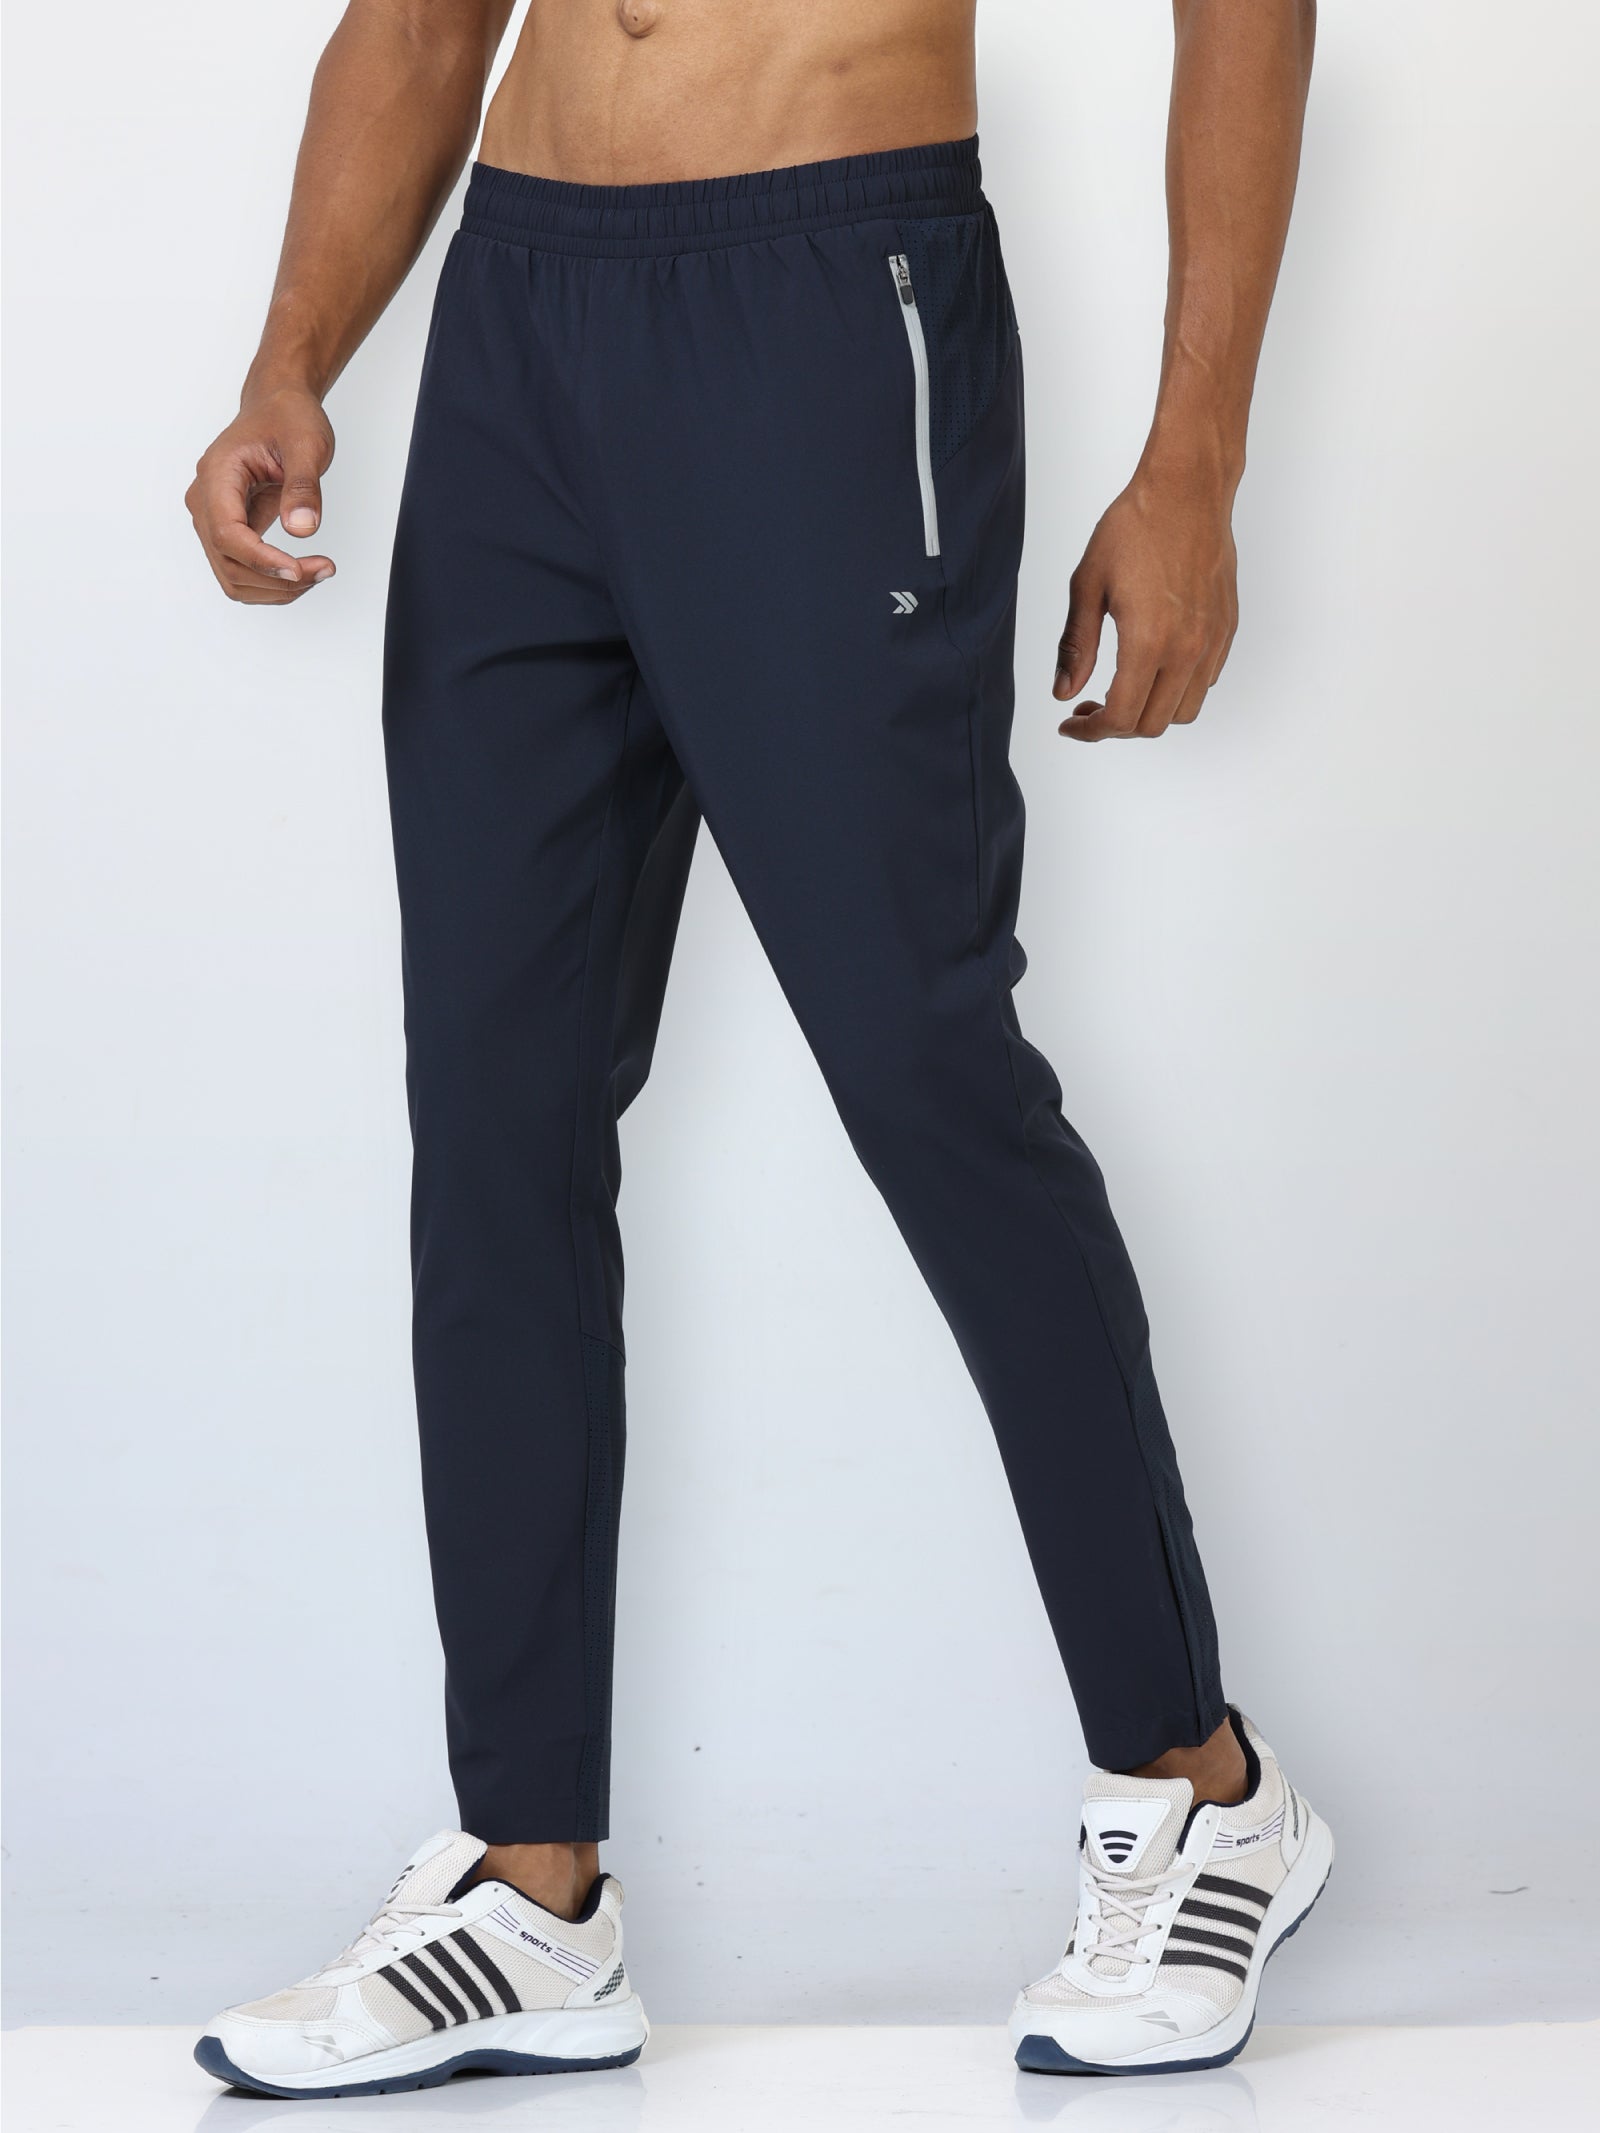 NWT Adidas Men's BLD FP Woven Track Pants Originals Nylon Pant Sports Sz S  | eBay